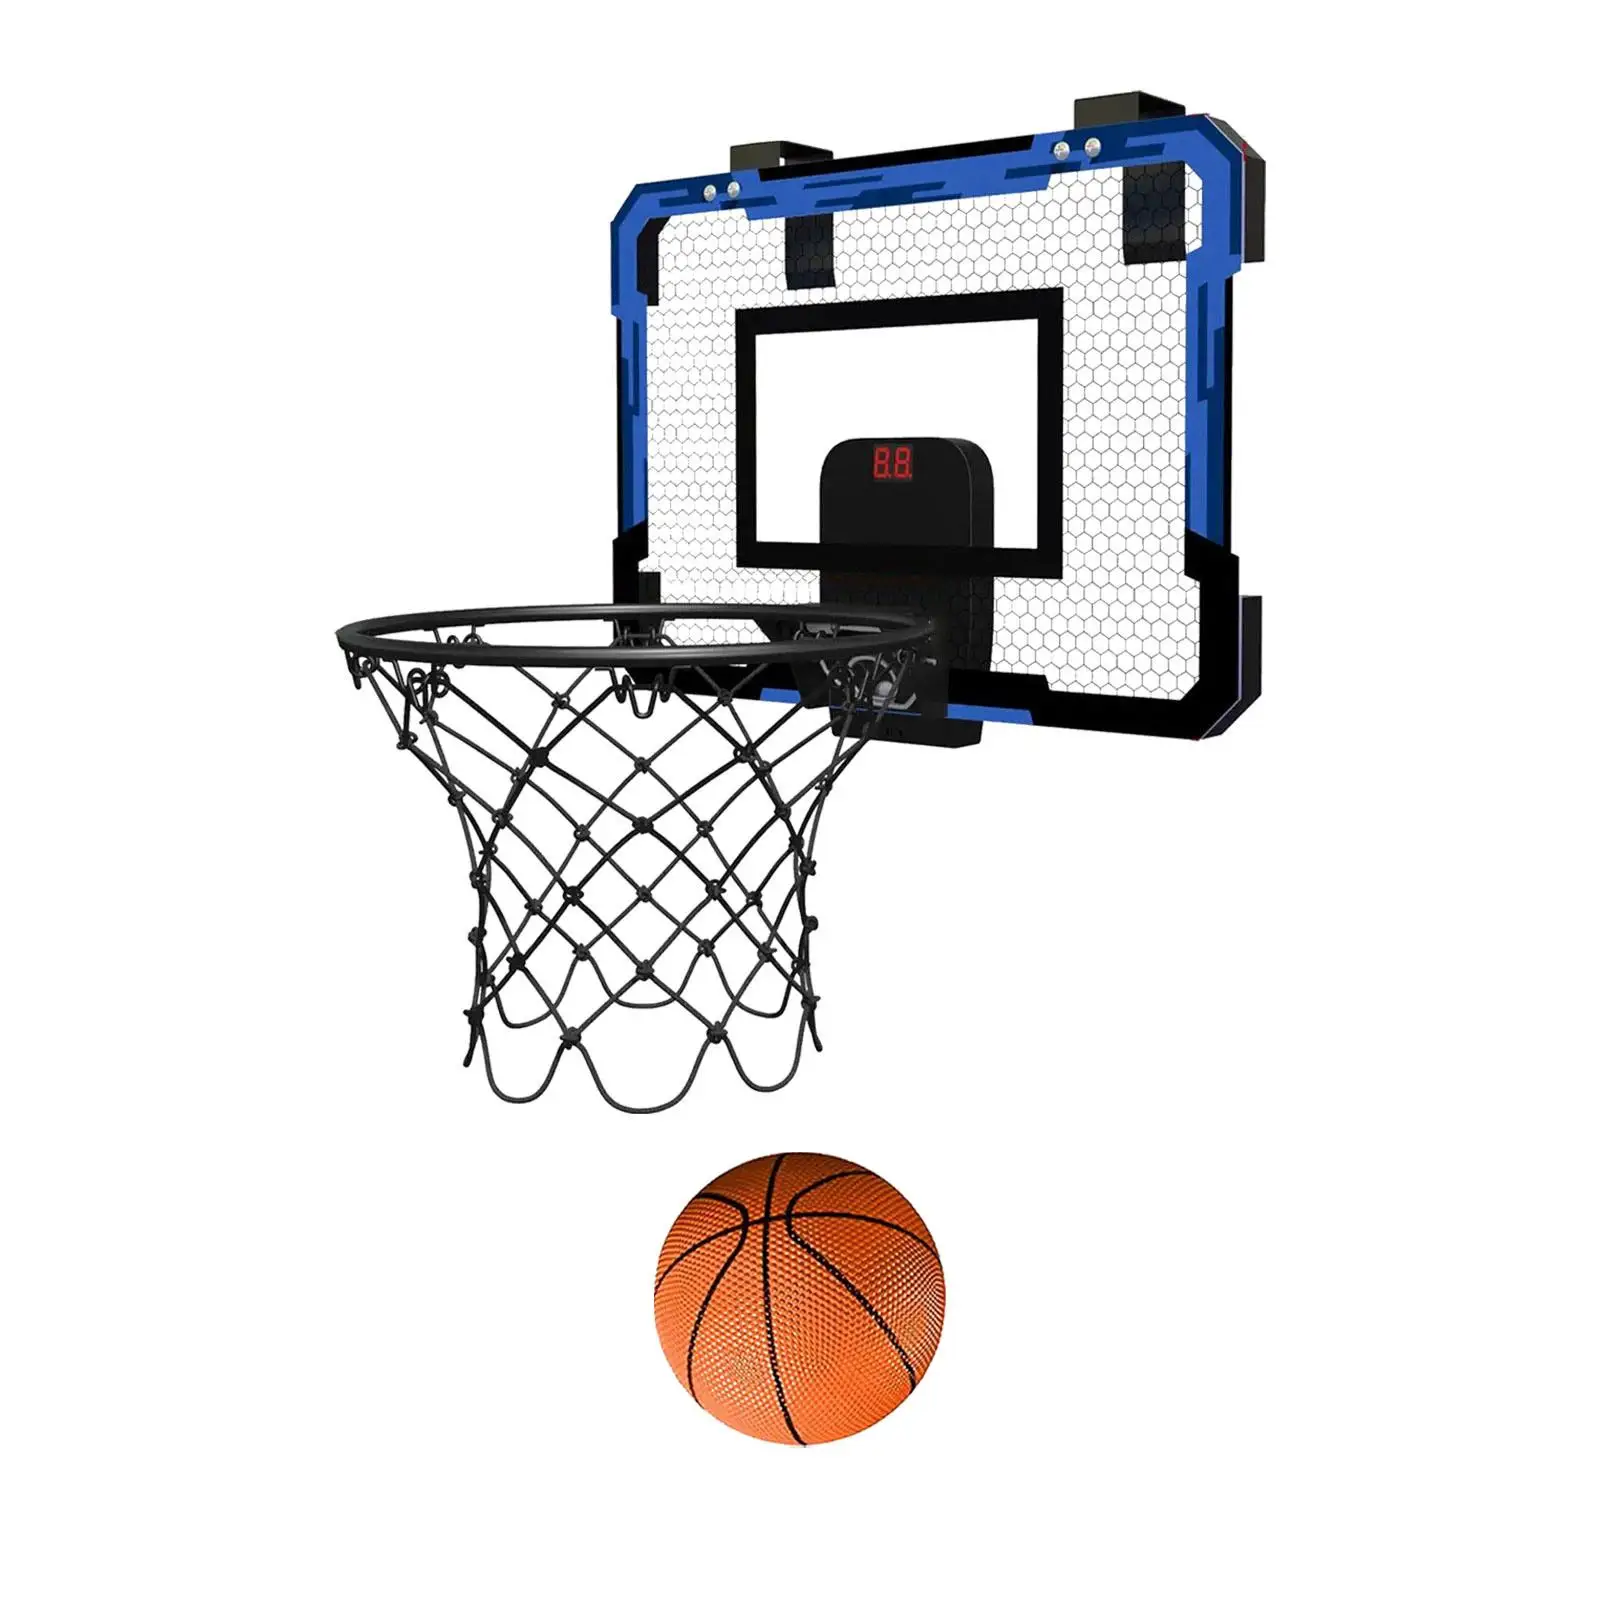 Wall Mounted Basketball Hoop, Door Basketball Hoop Basketball Toys, Over The